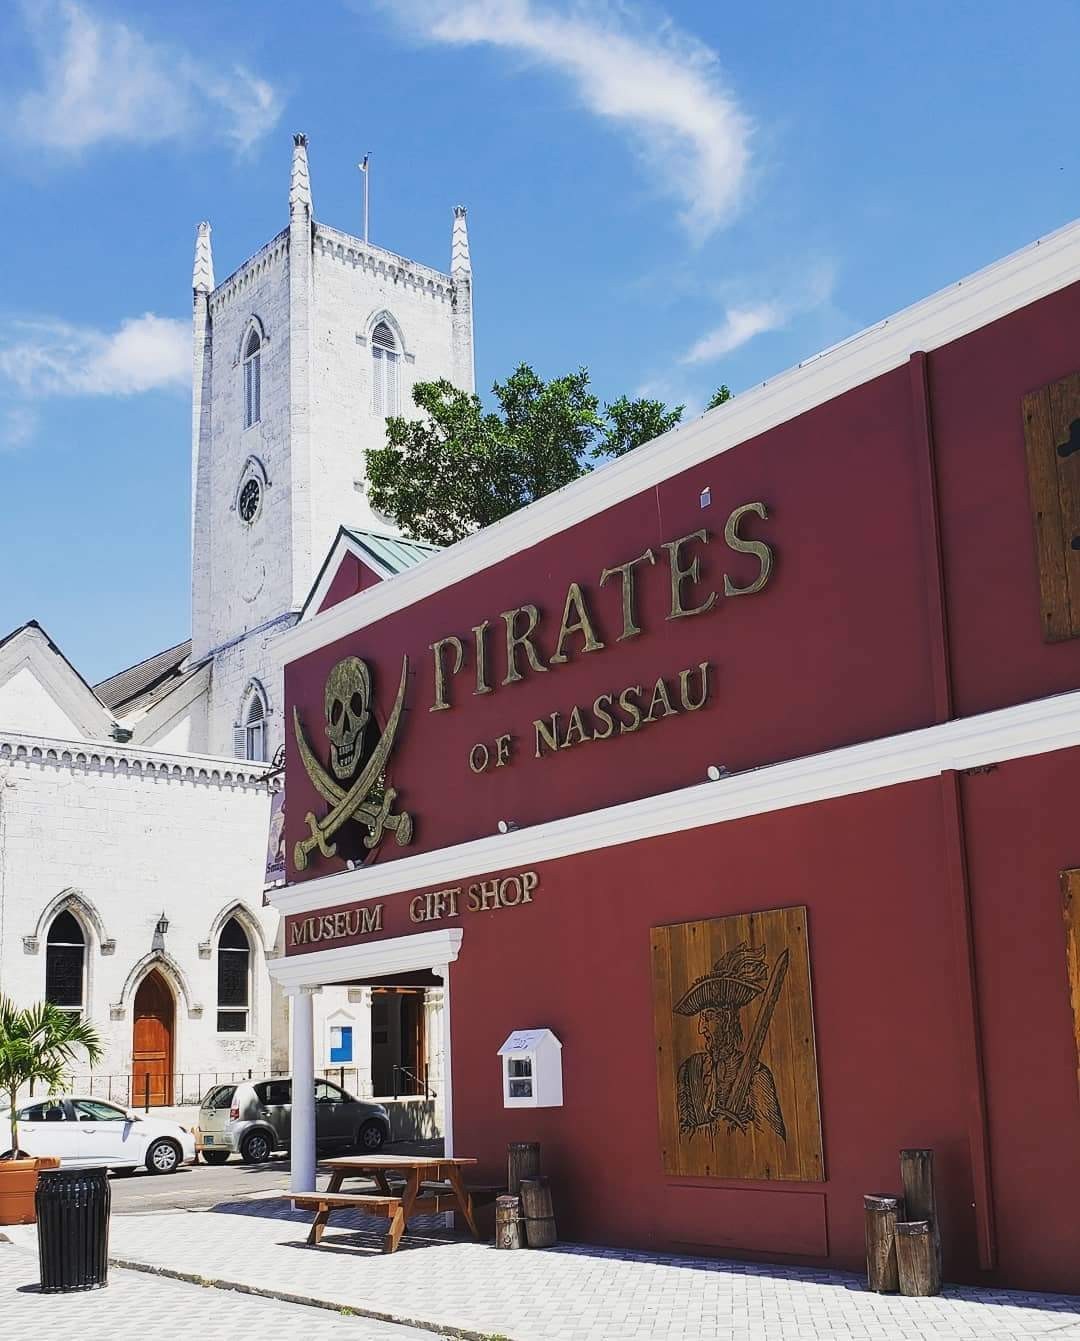 Pirate's museum, Nassau